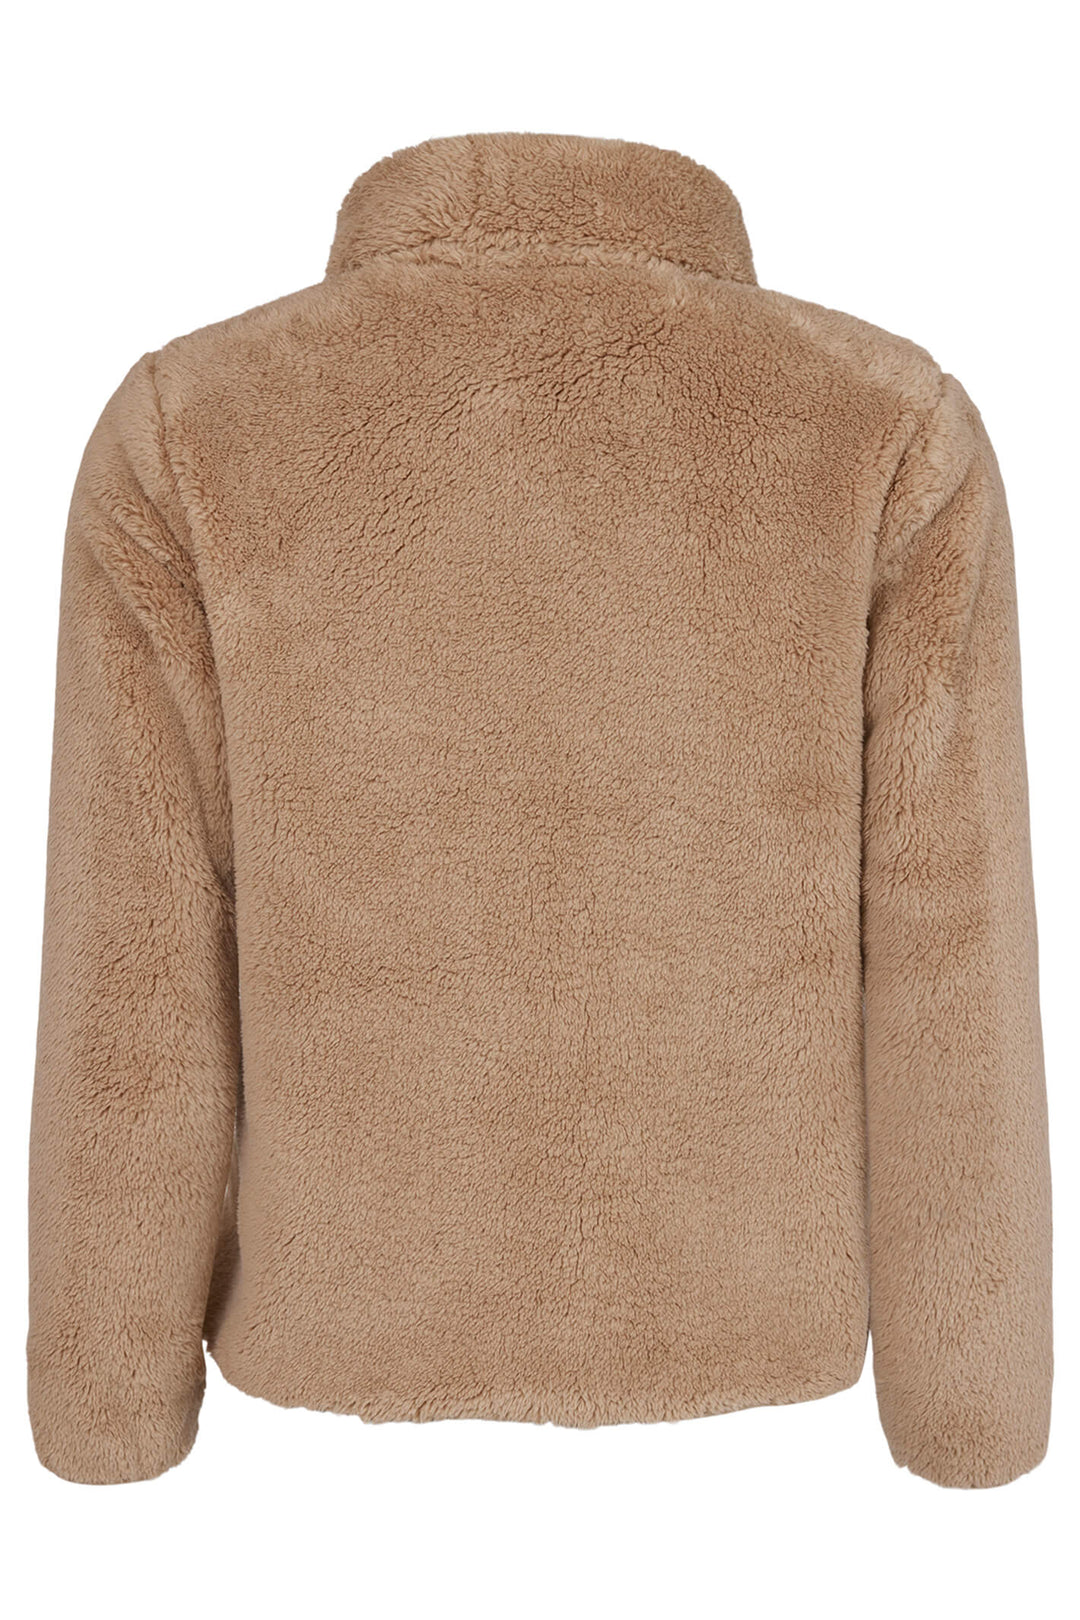 Sunday 6900 15 Taupe Plush Faux Fur Zip Front Jacket - Experience Boutique